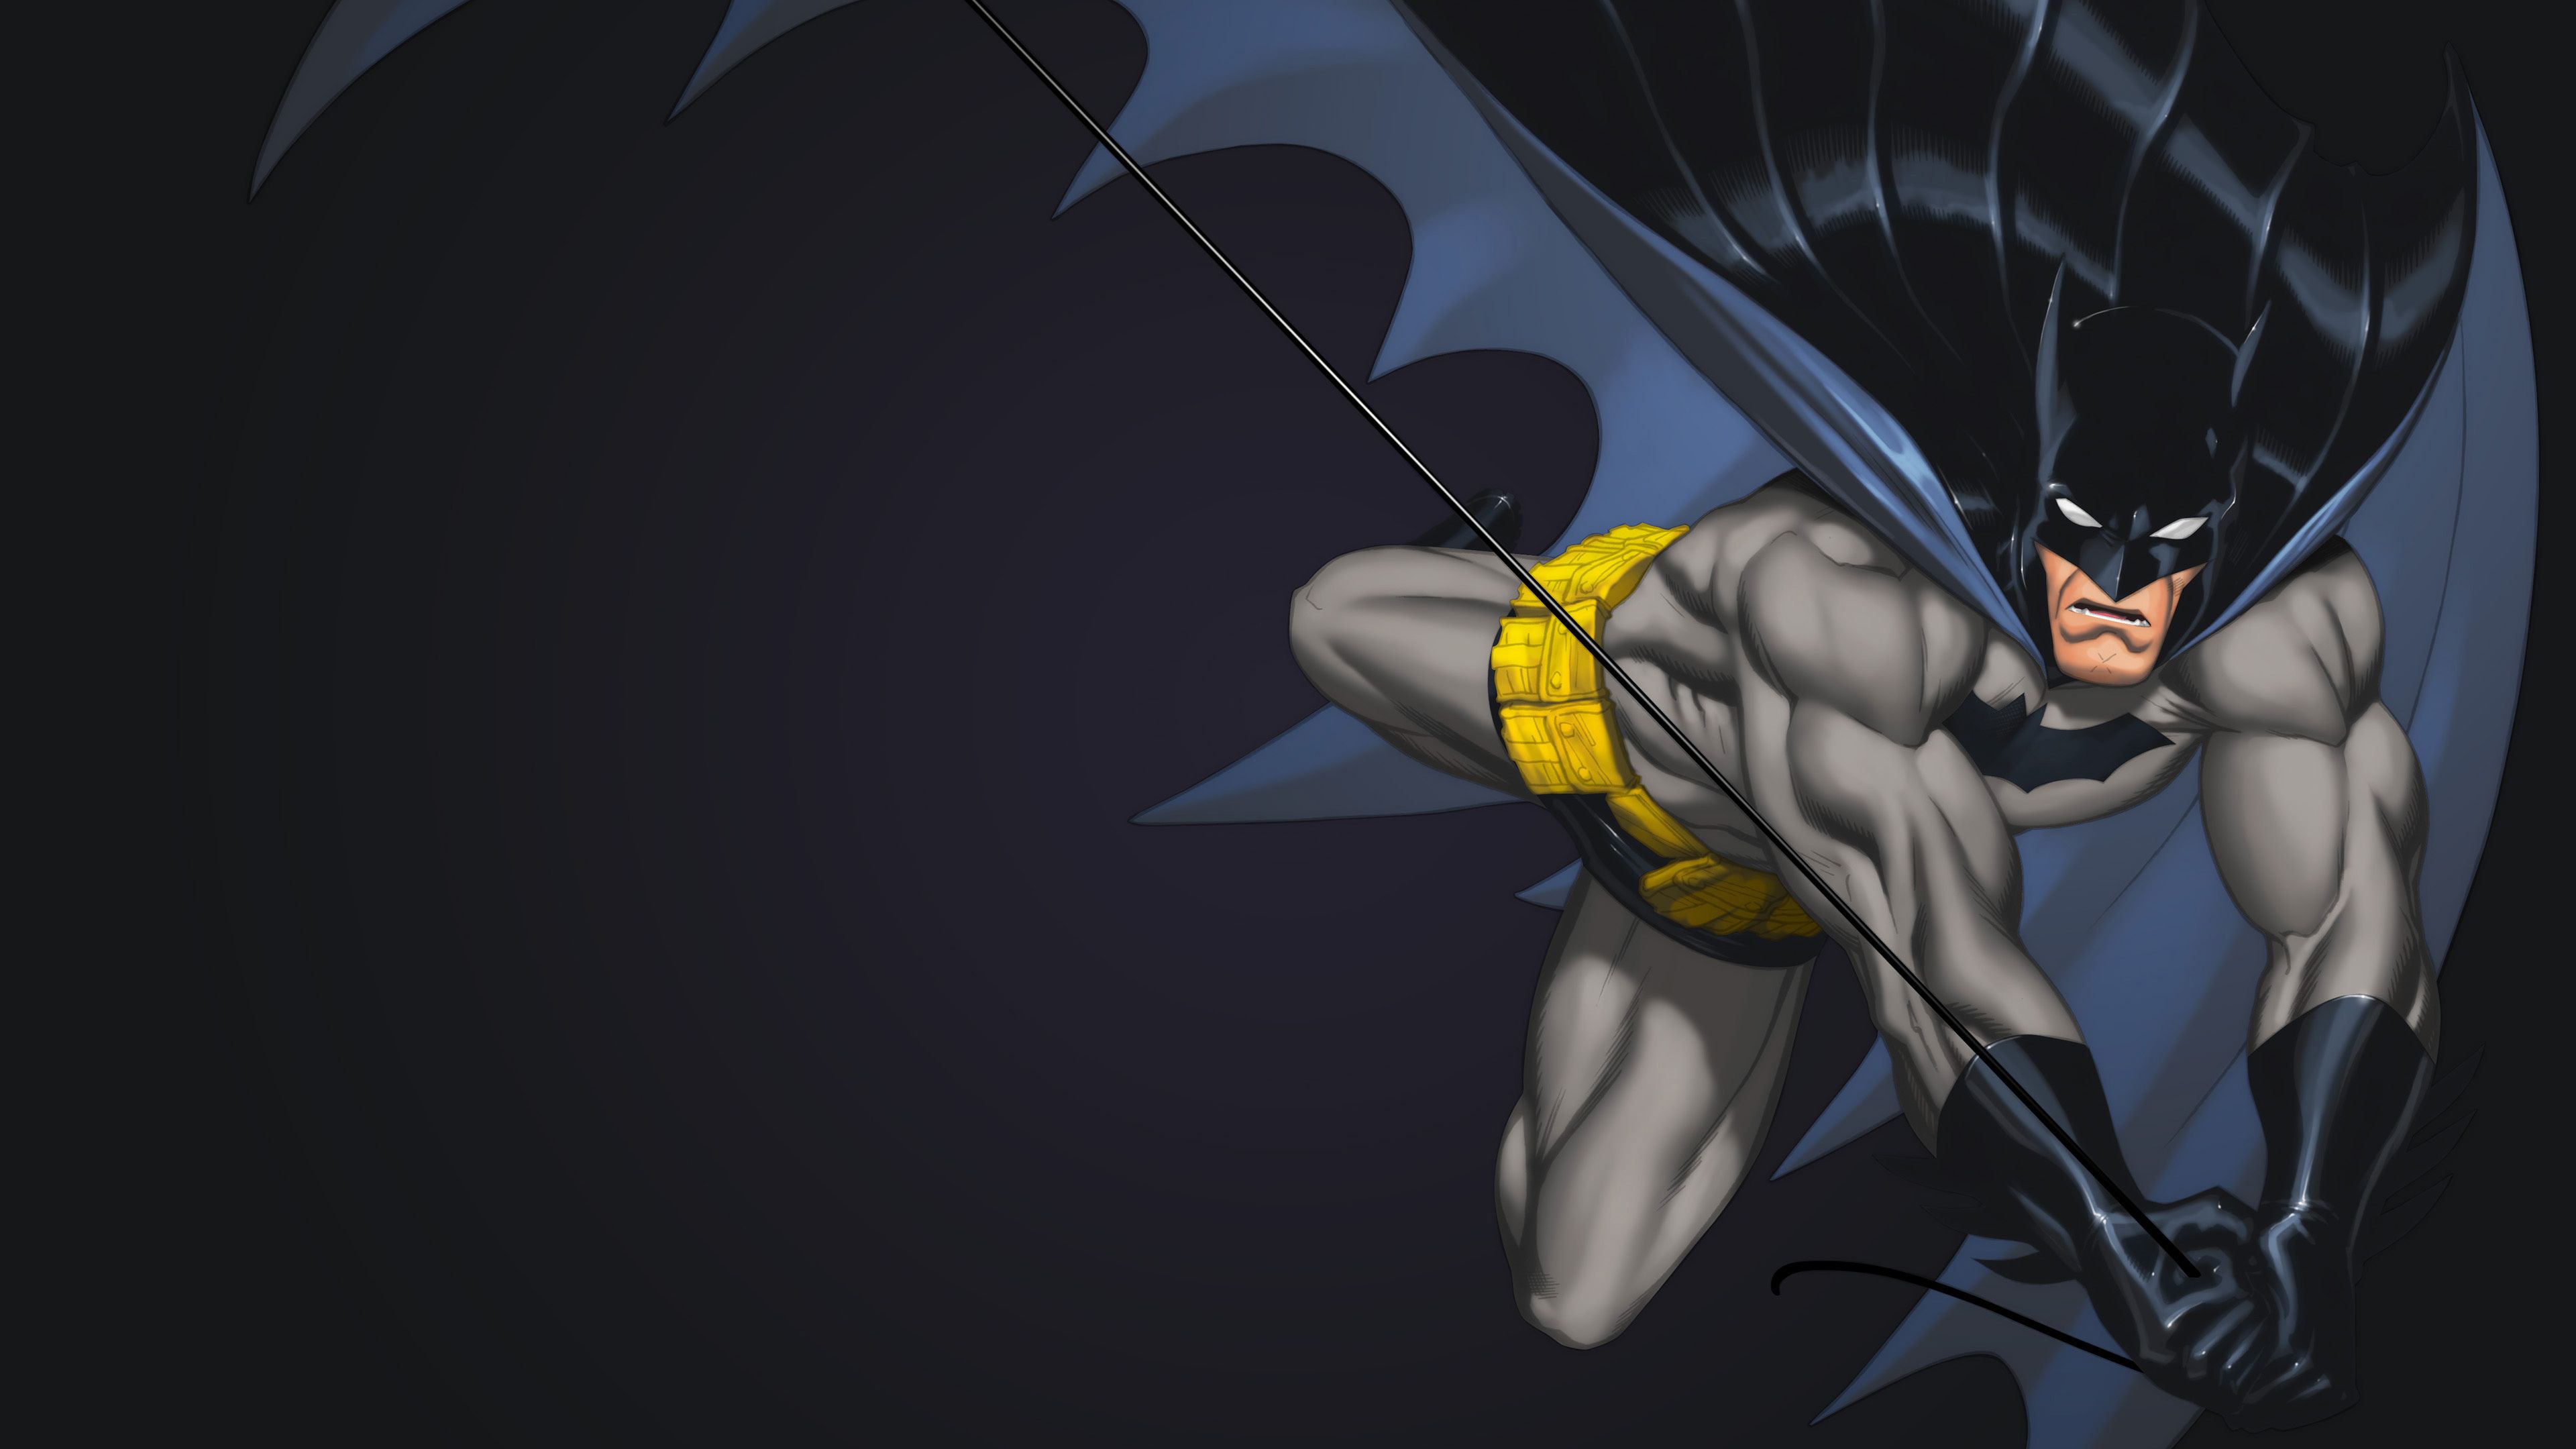 Batman Art 4k Superhero, HD Superheroes, 4k Wallpaper, Image